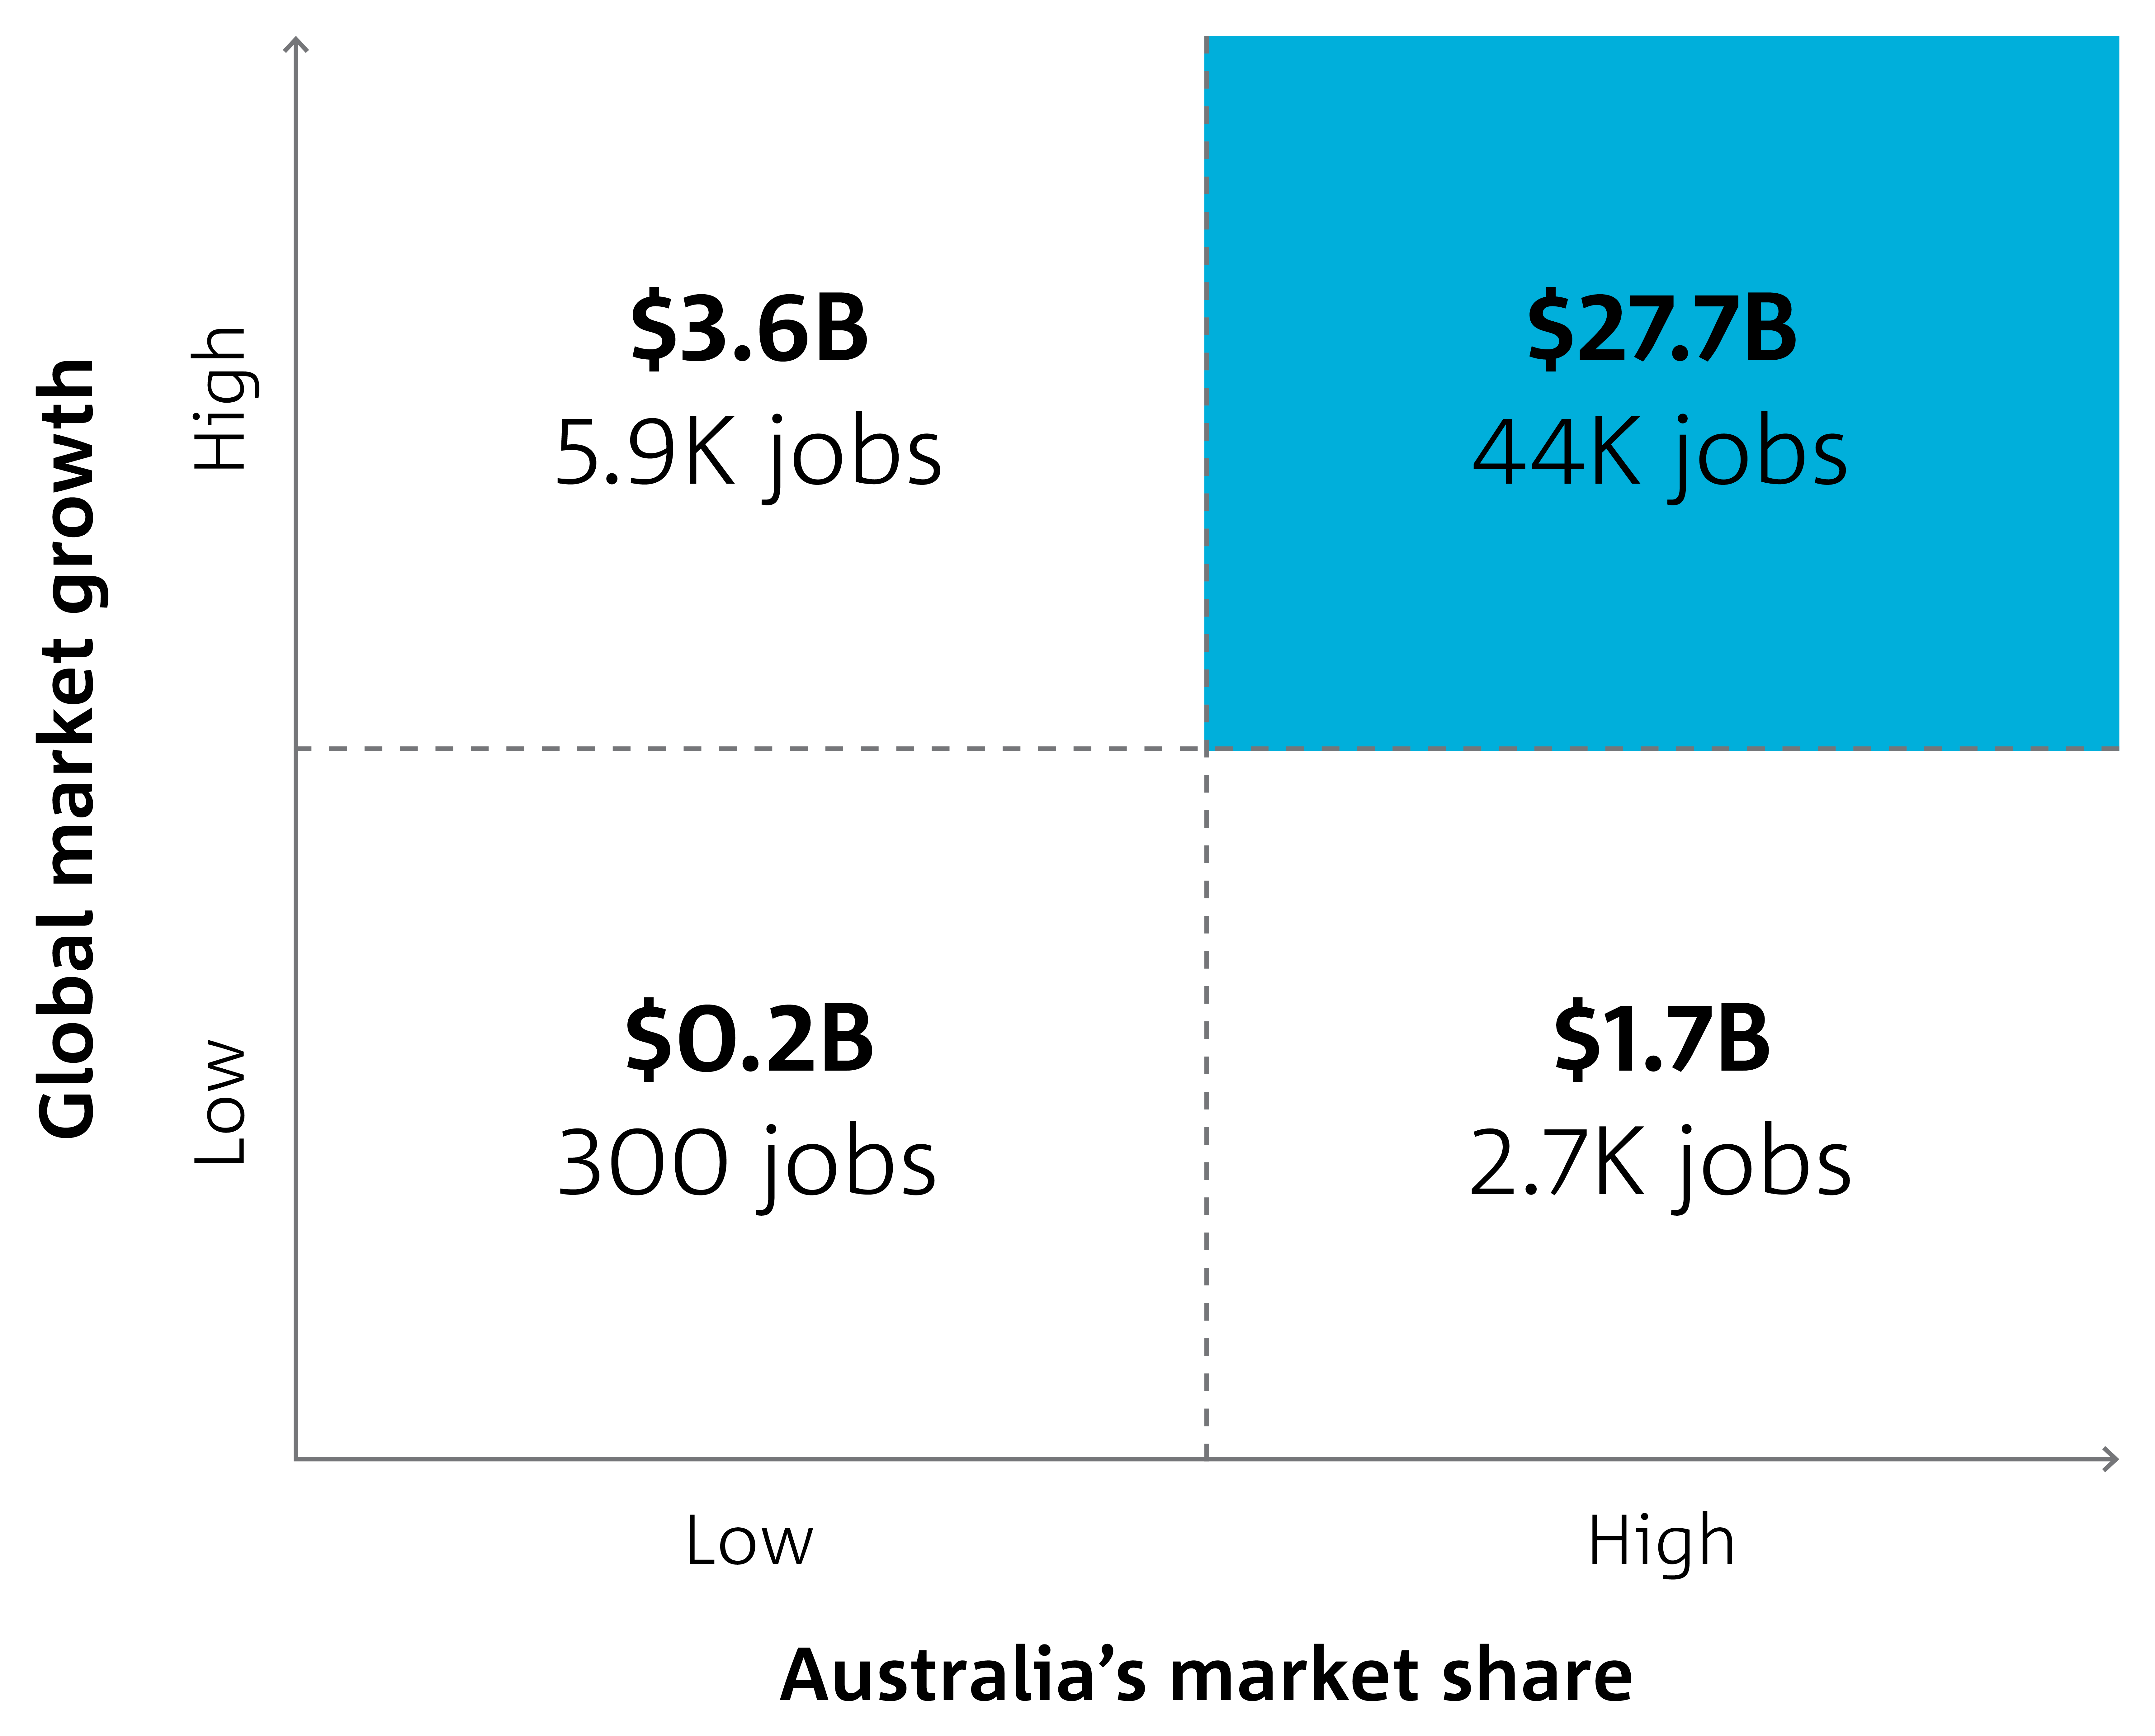 Matrix framework results for Australia’s potential 2040 revenue and employment